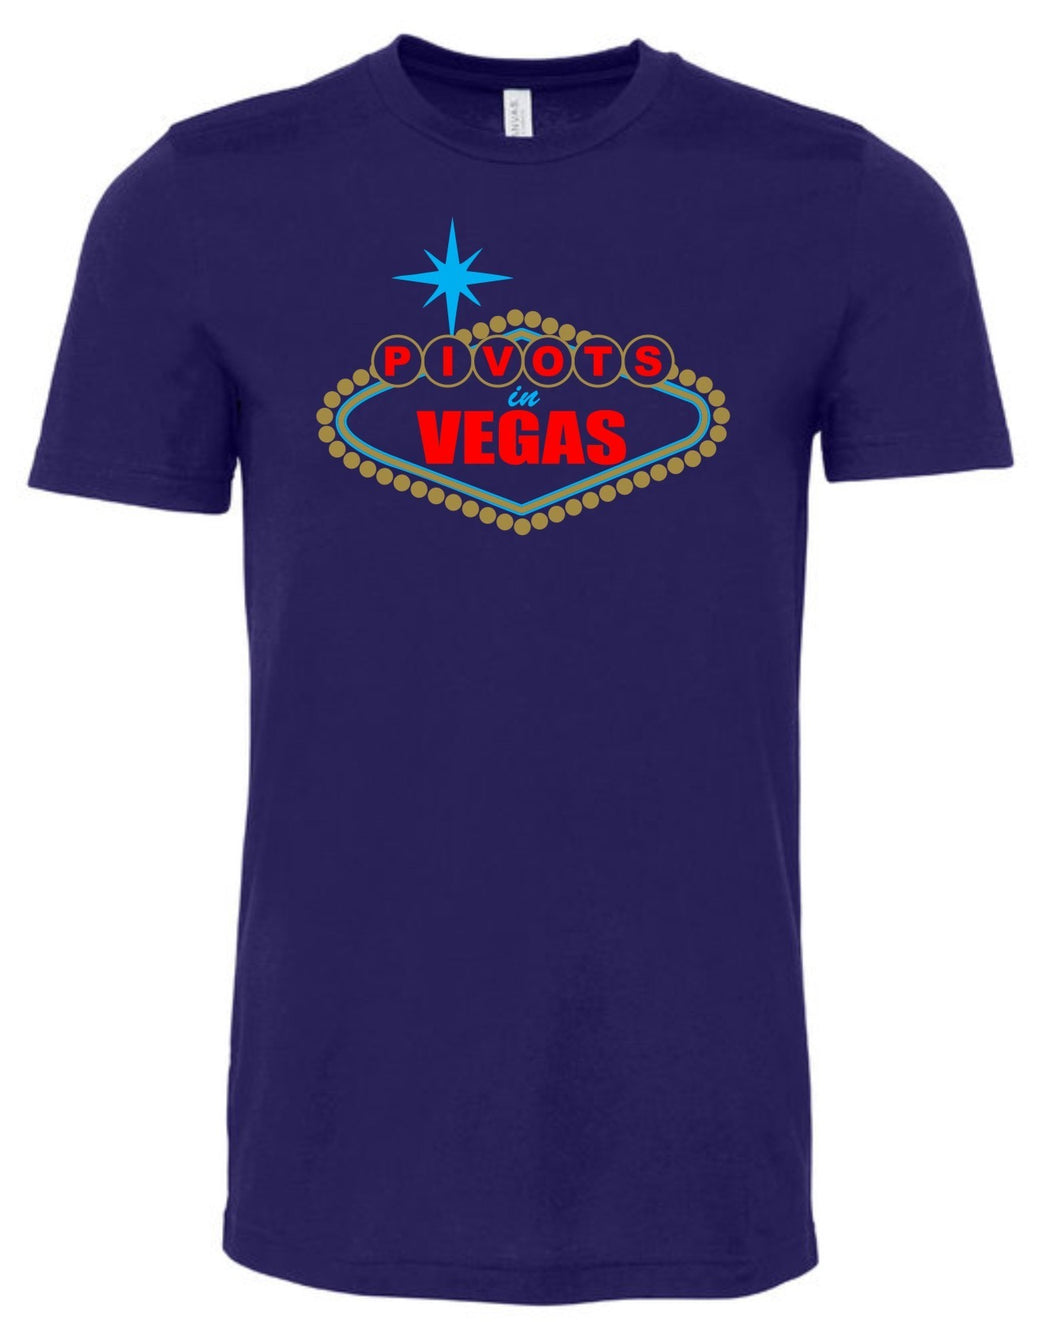 PIVOTS in Vegas T-Shirt